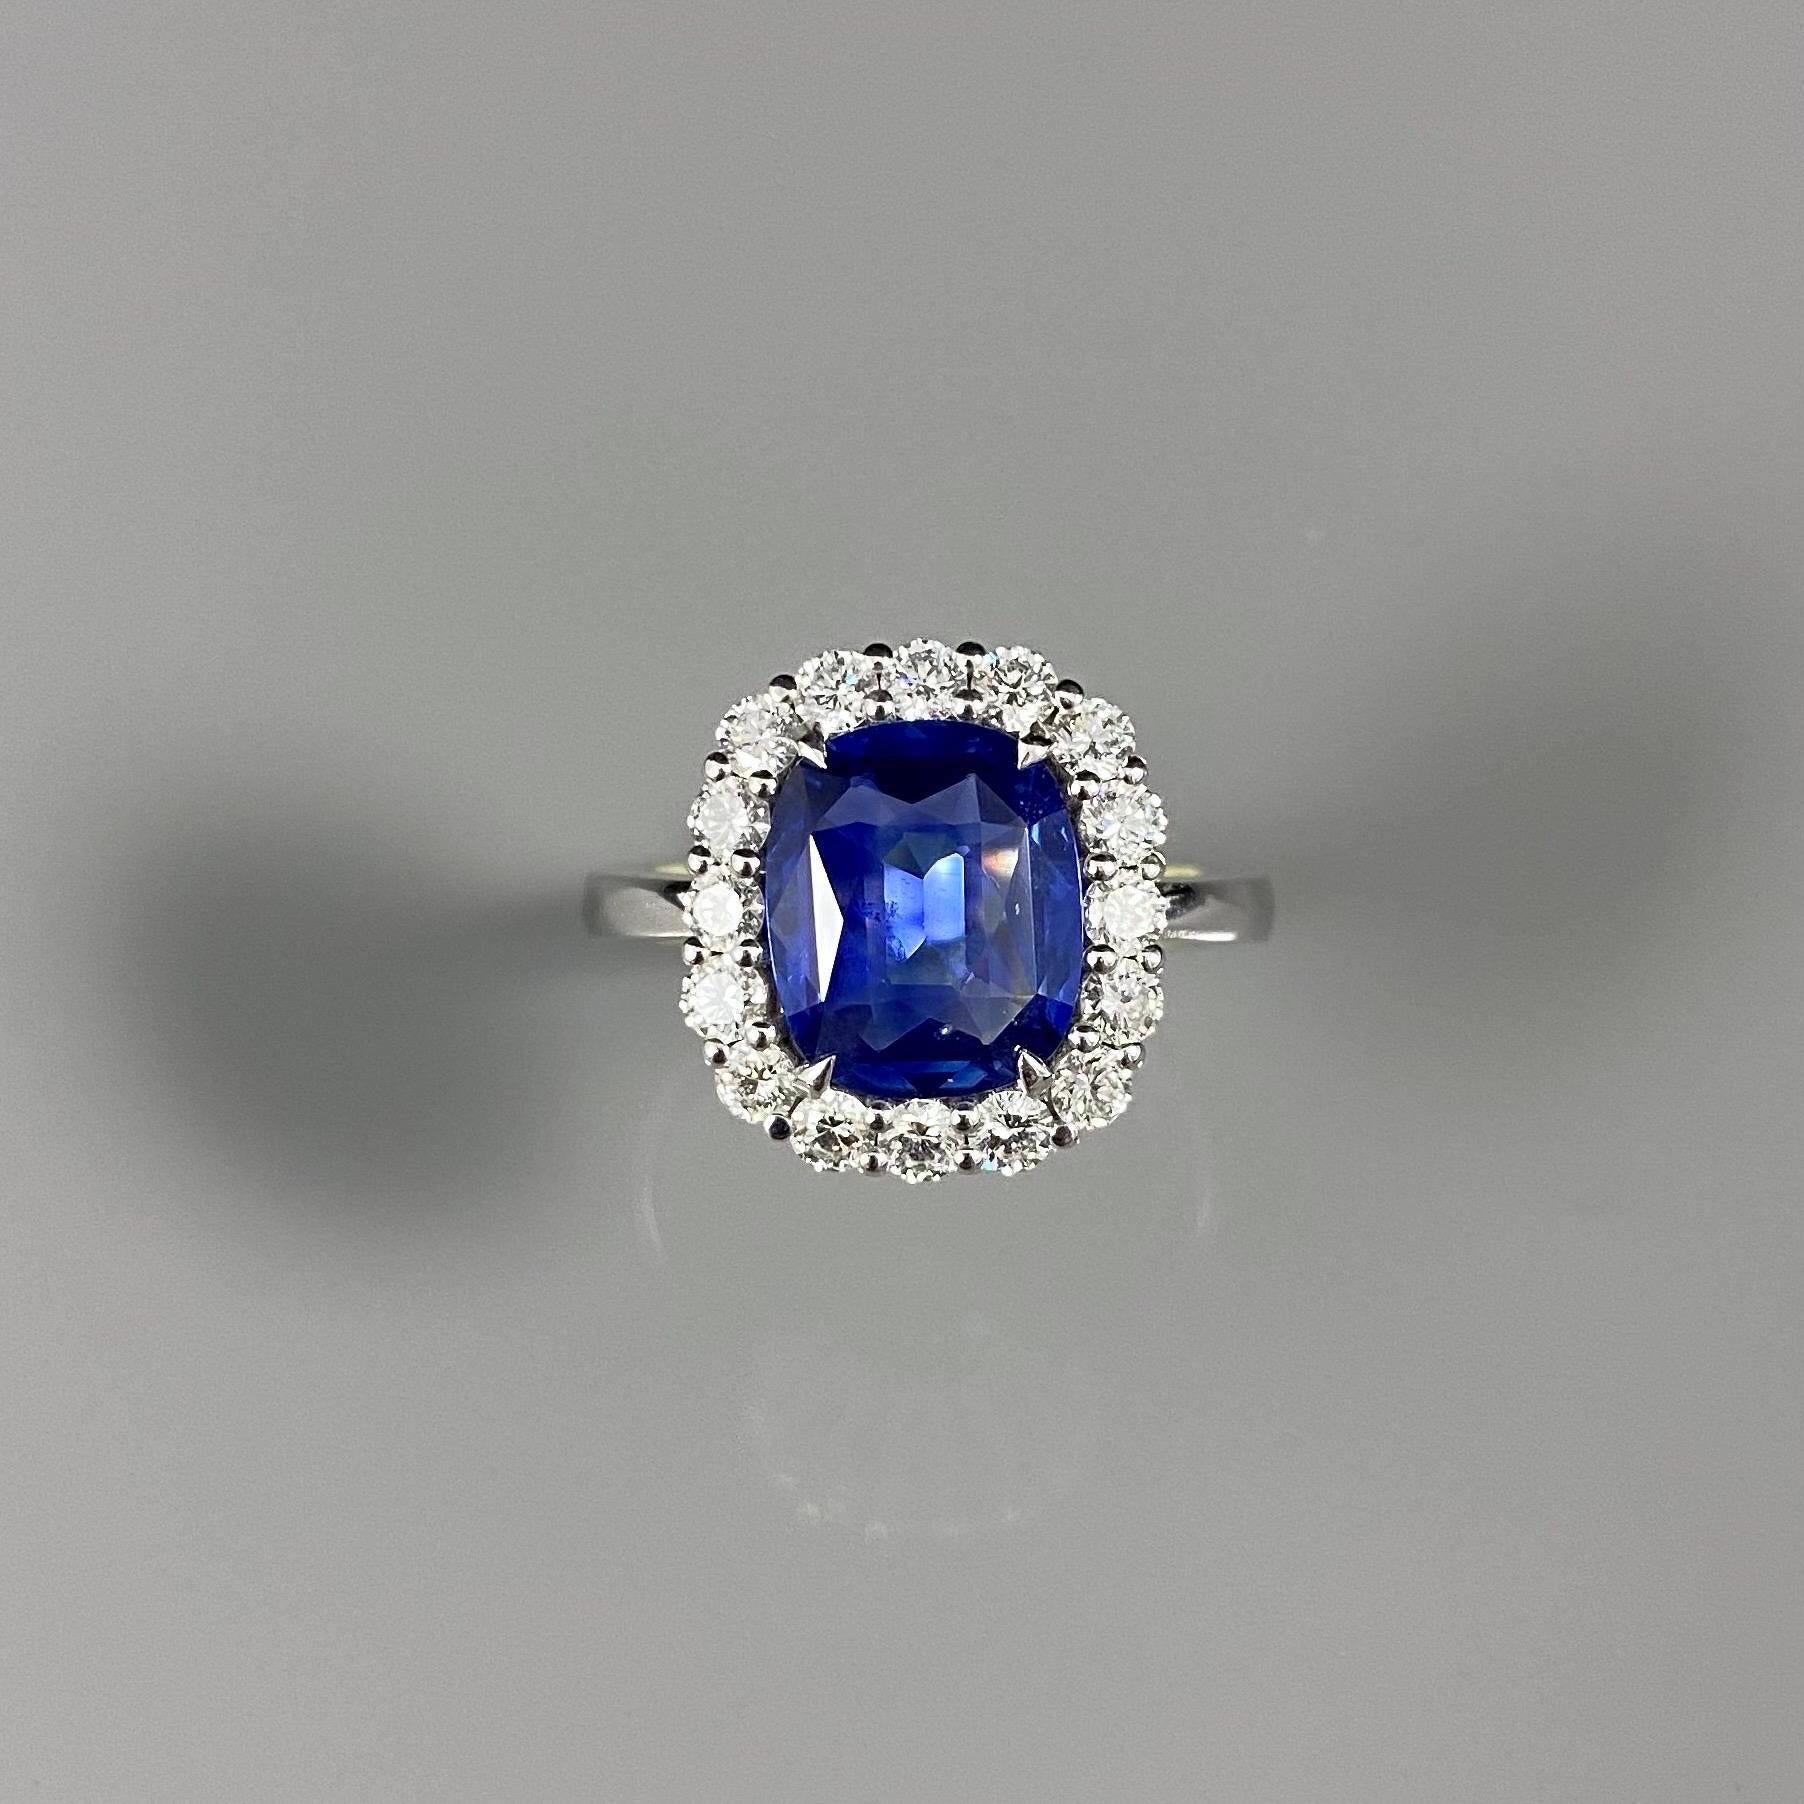 Contemporary 3.1 Carat Cornflower Blue Sapphire Diamond Cluster Engagement Ring White Gold